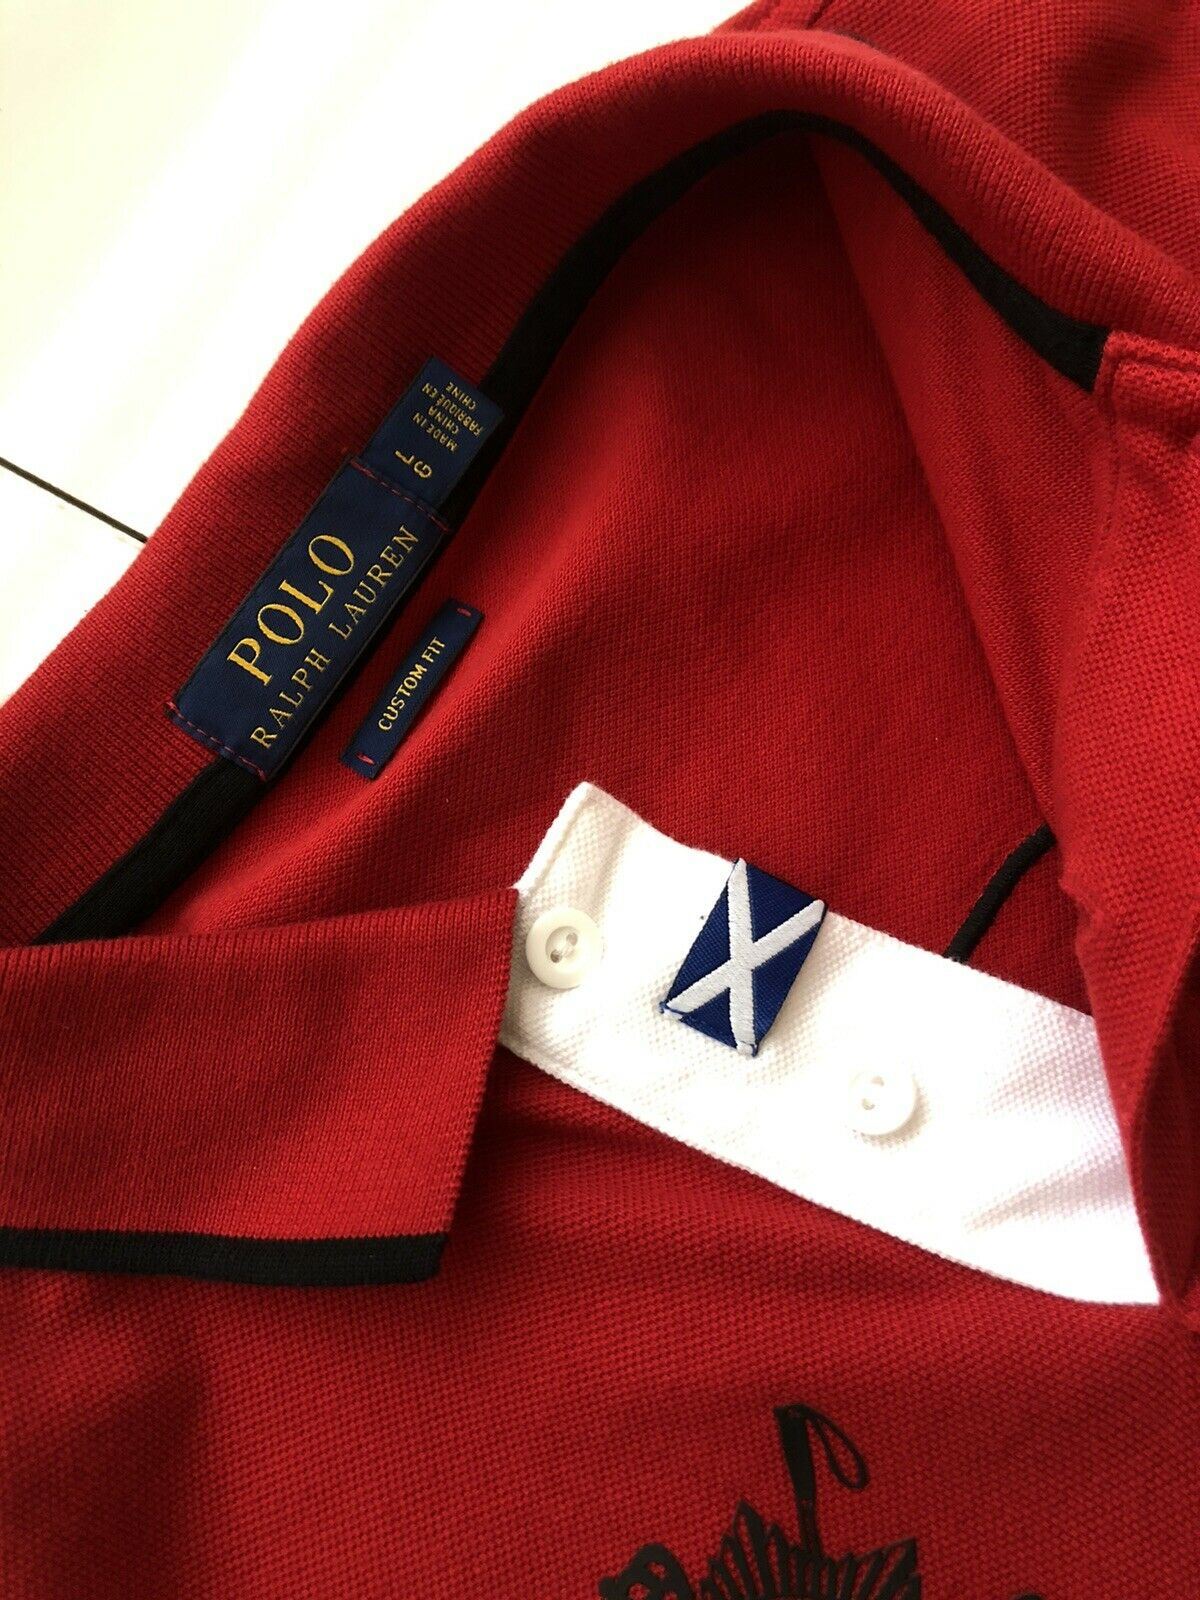 Polo Ralph Lauren Blackwatch Rotes Poloshirt mit individueller Passform L